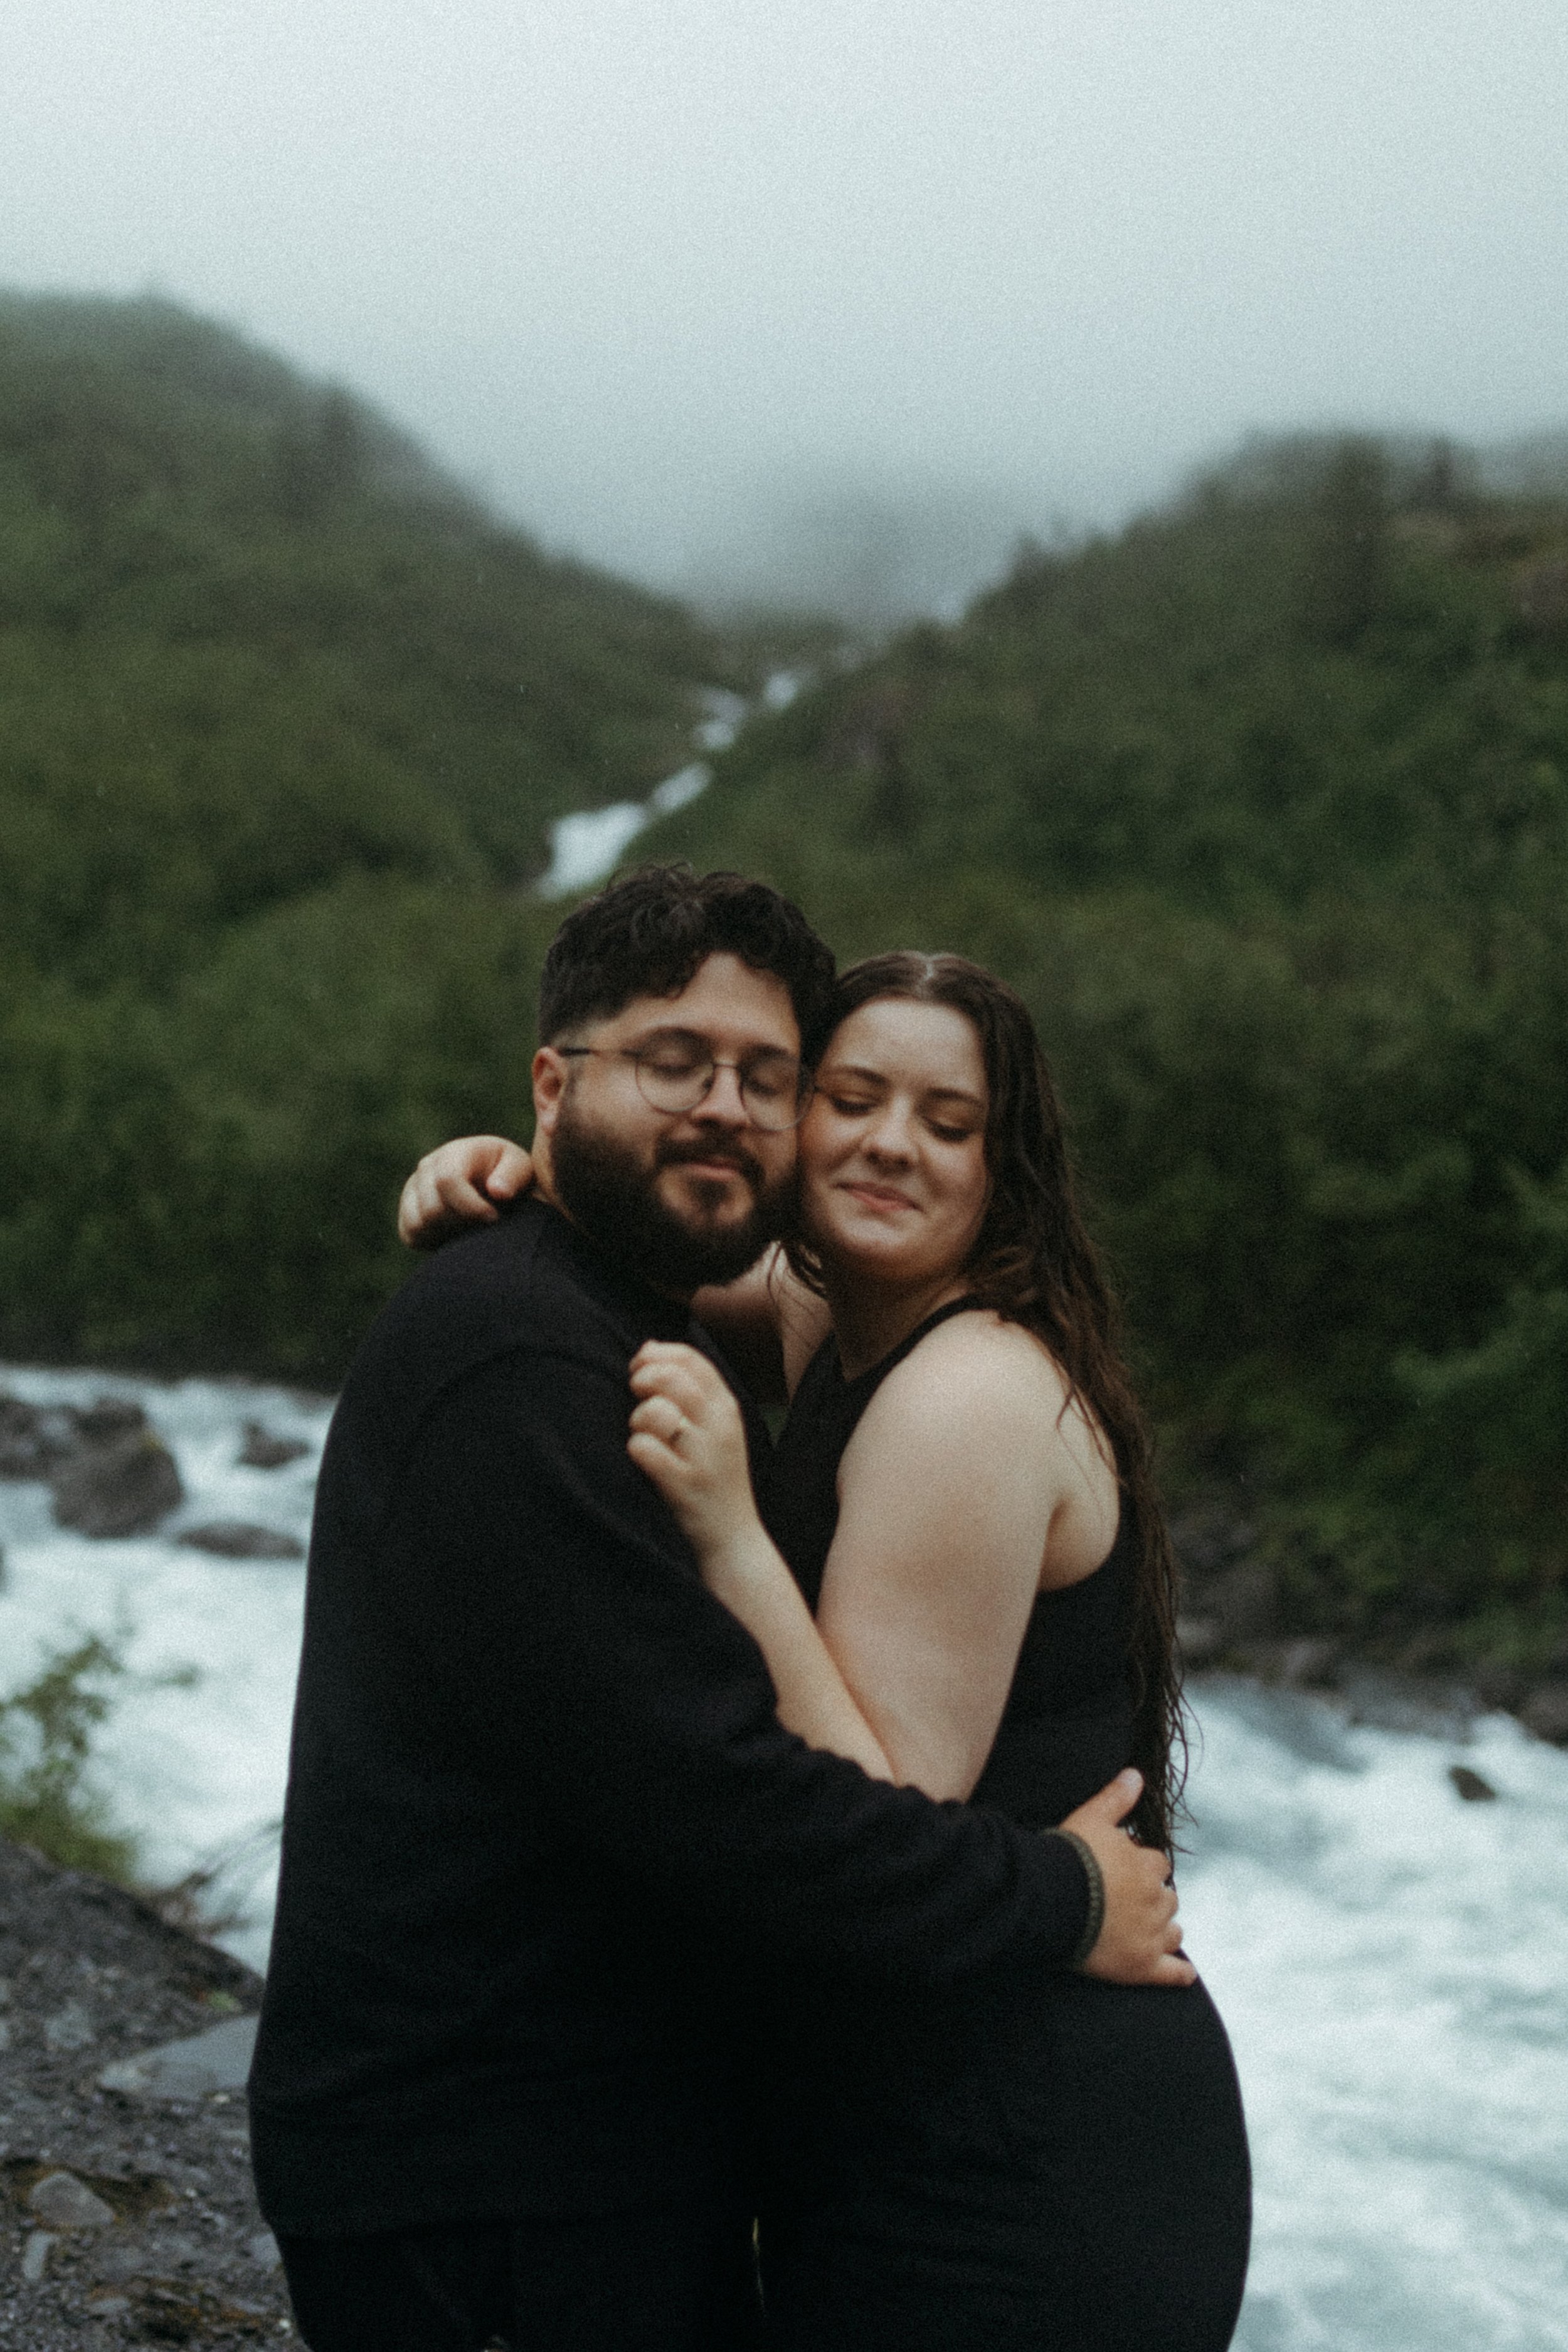 alaska waterfall romantic artistic couples photography